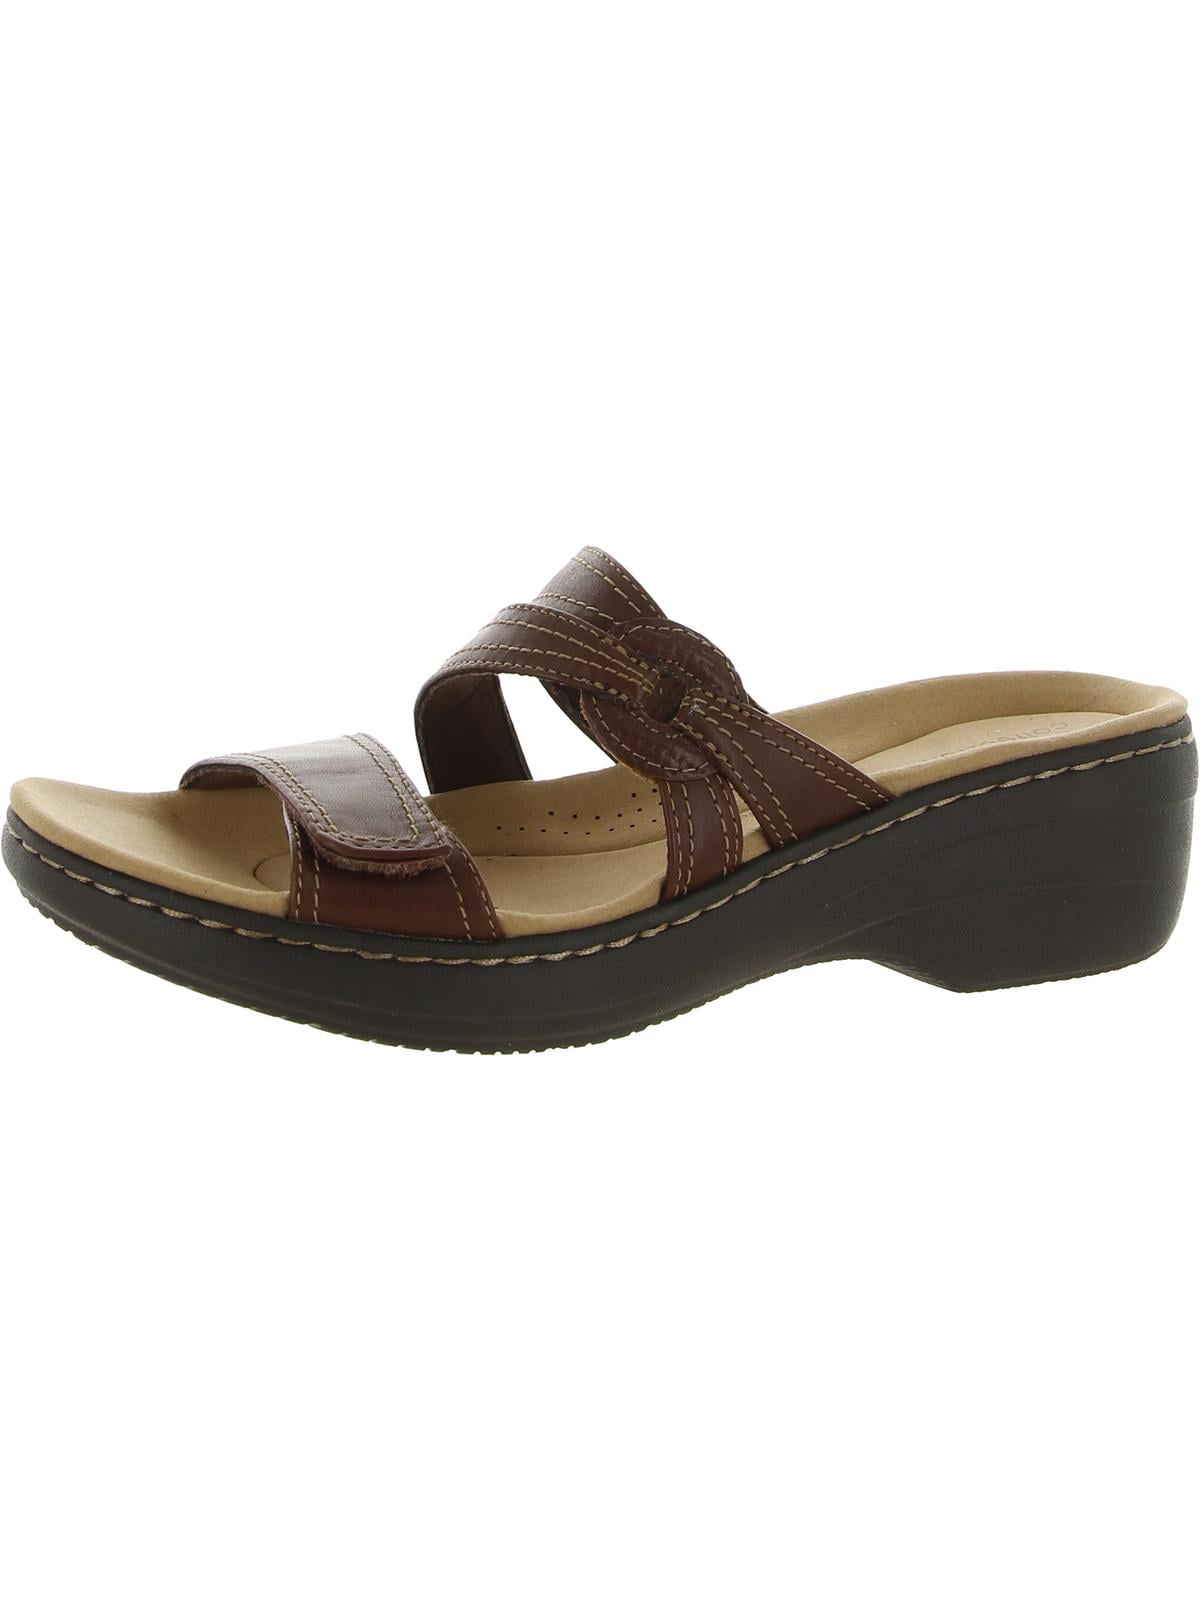 Clarks Womens Merliah Coral Leather Open Toe Wedge Sandals - Walmart.com